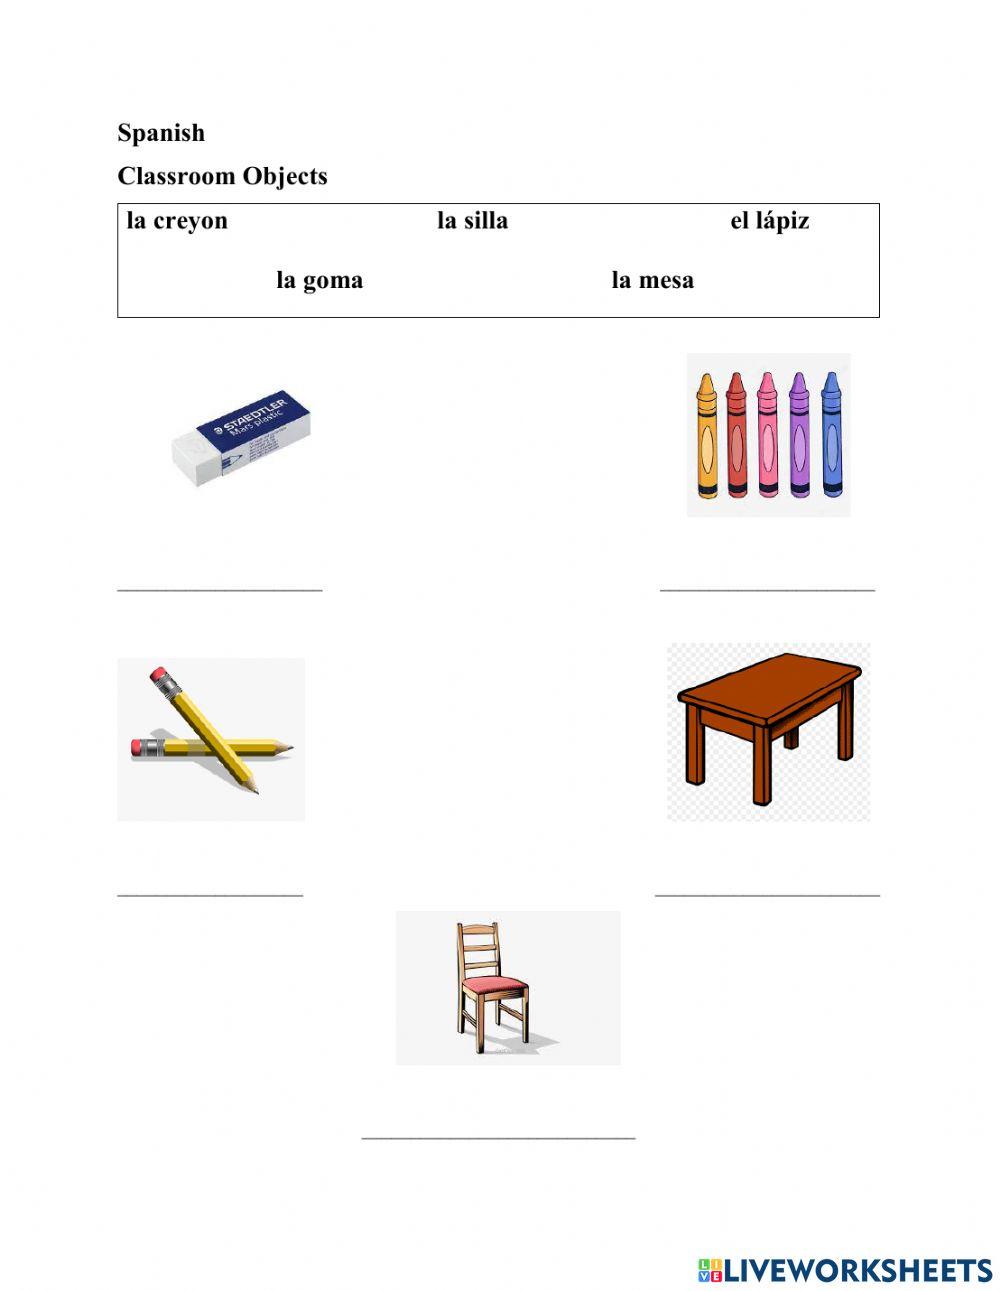 Class Objects